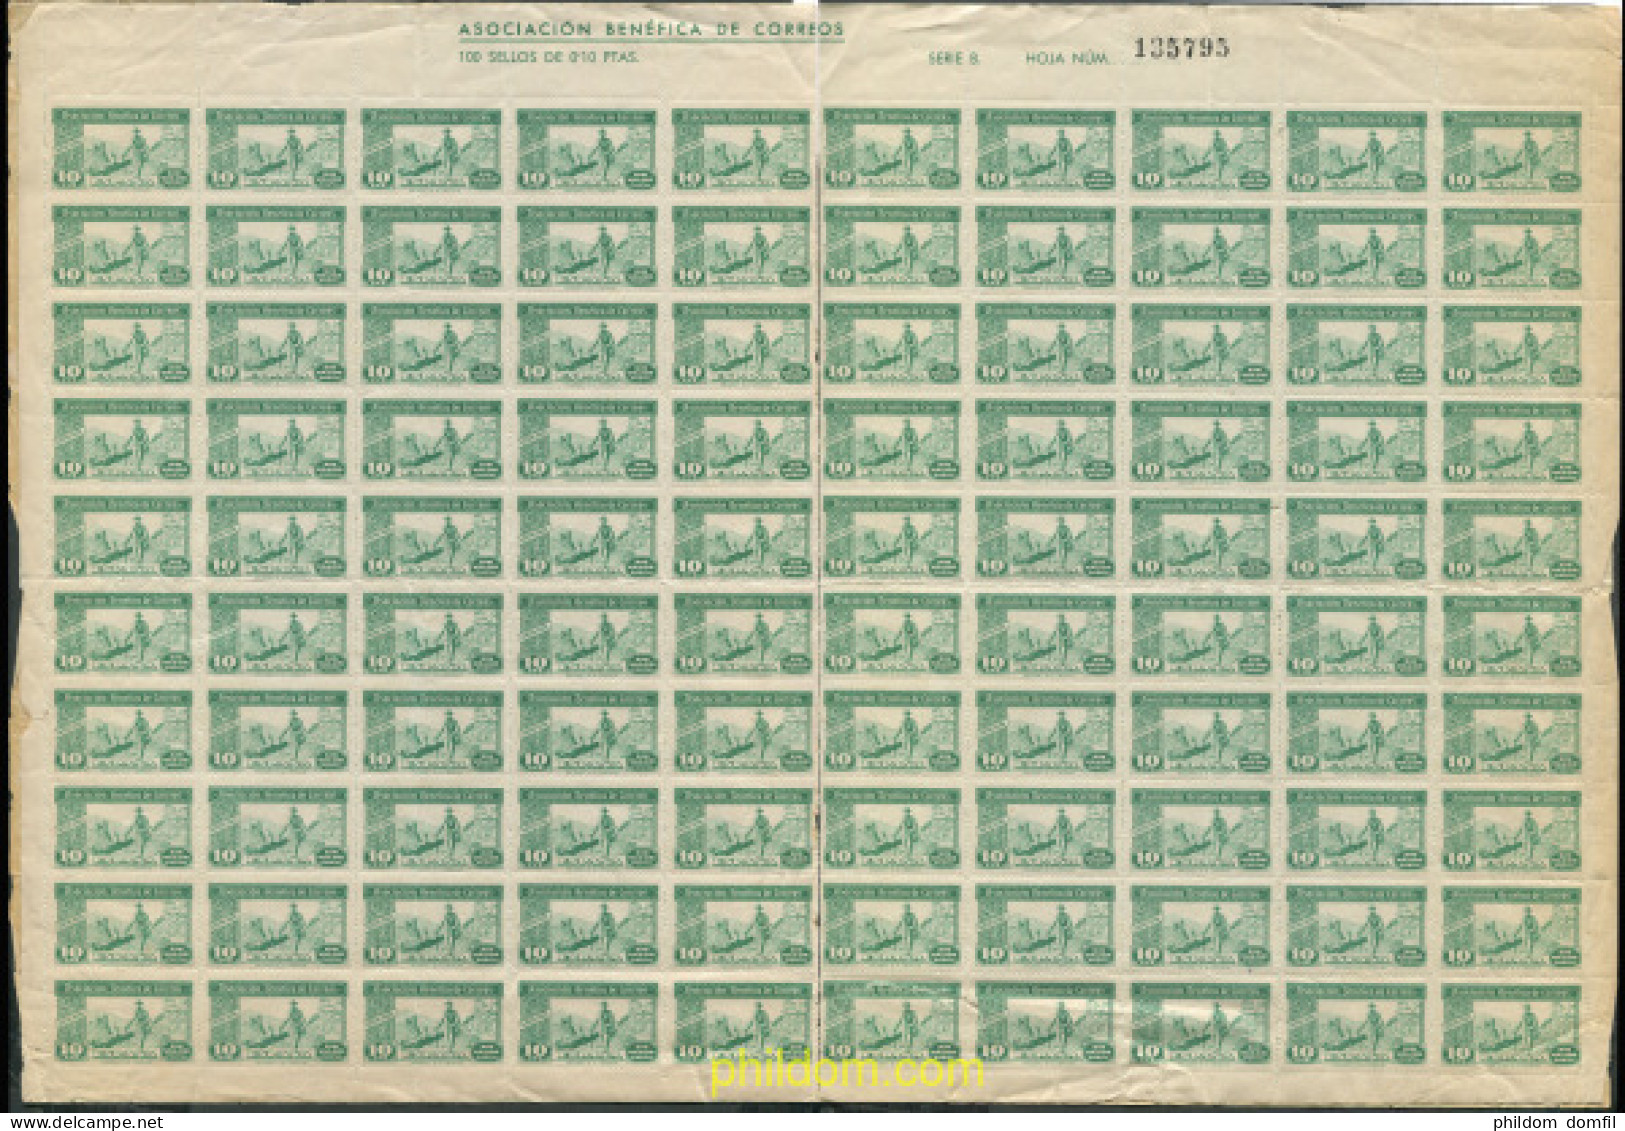 697438 MNH ESPAÑA Viñetas 1944 ASOCIACION BENEFICA DE CORREOS - Unused Stamps